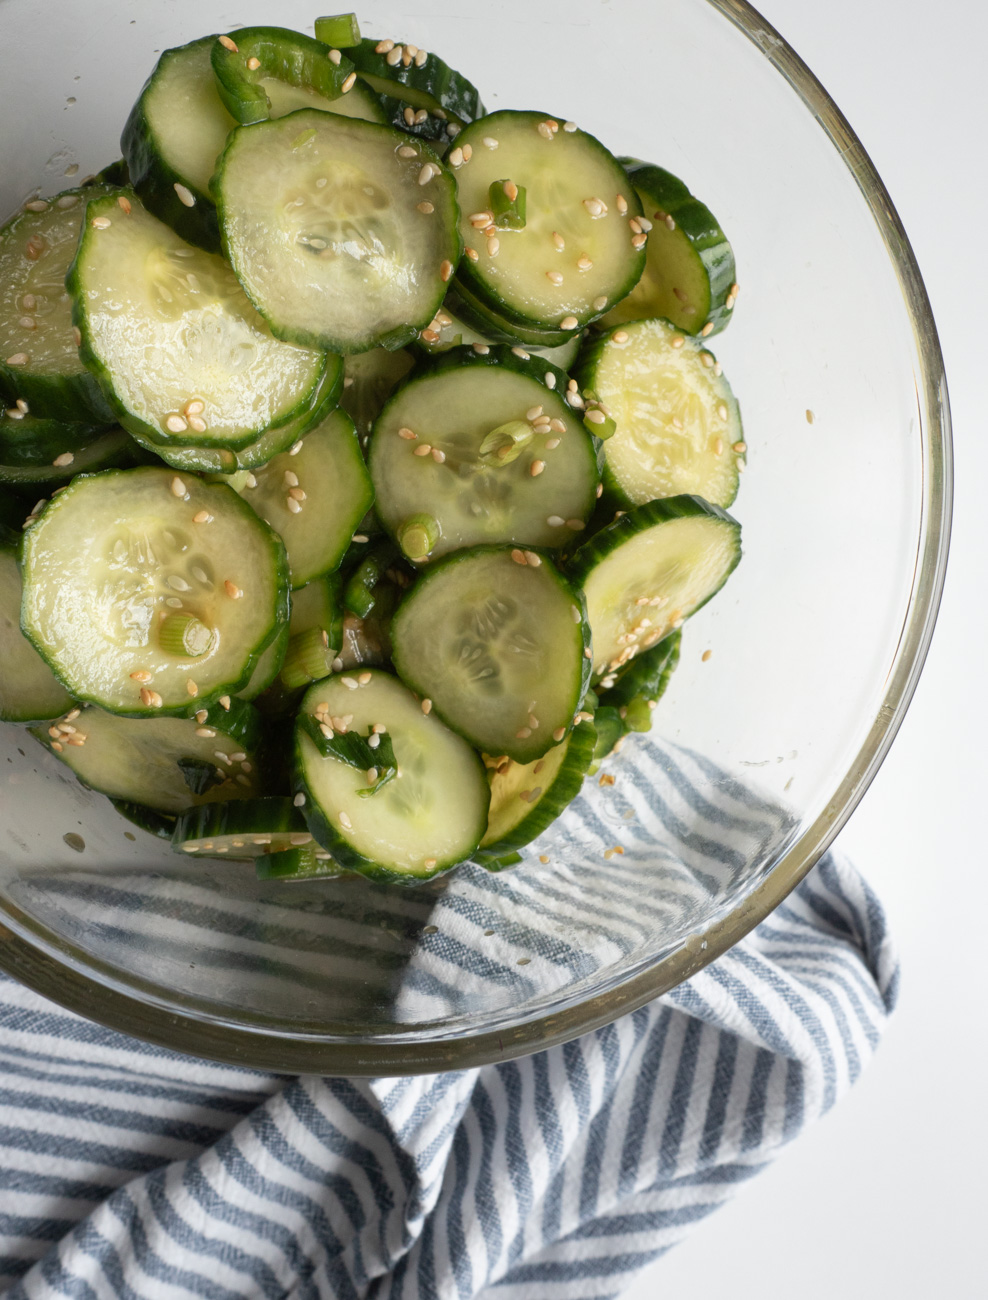 Marinated Cucumbers
